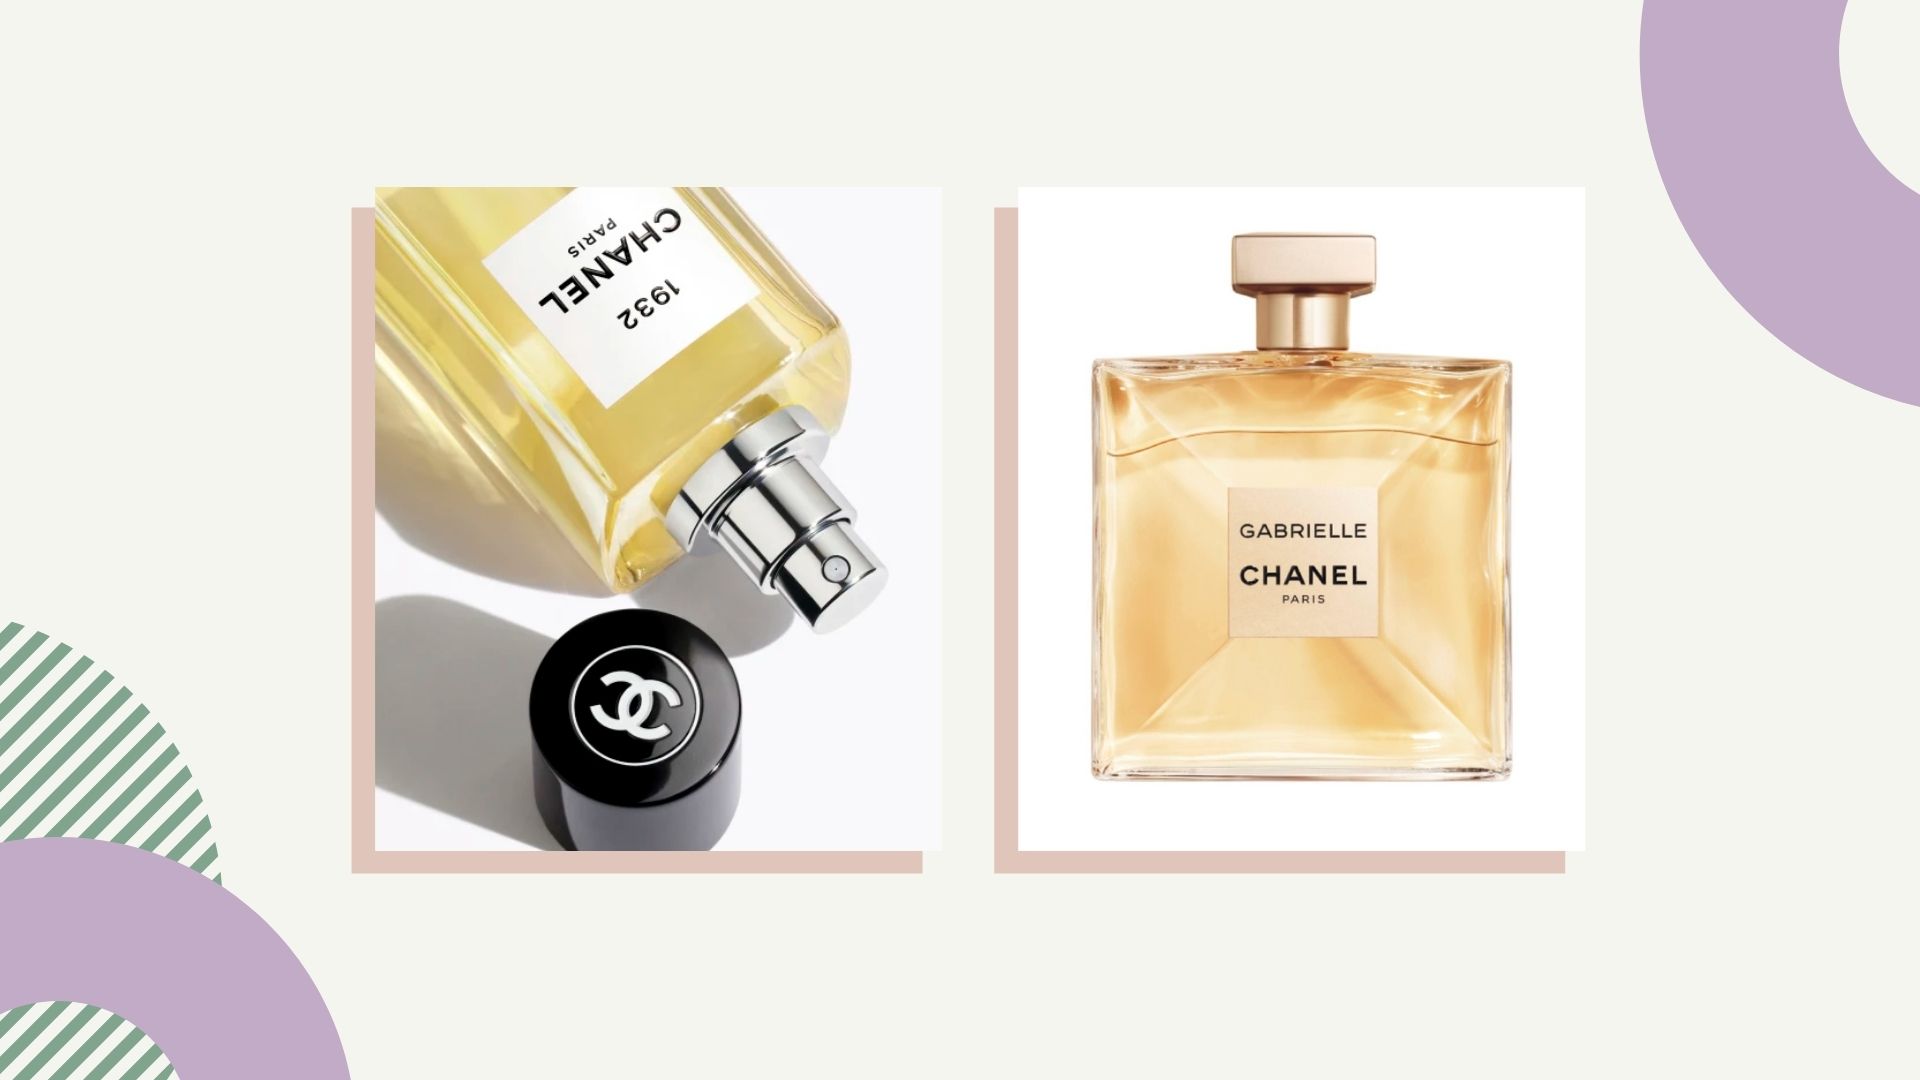 chanel perfumes ranked